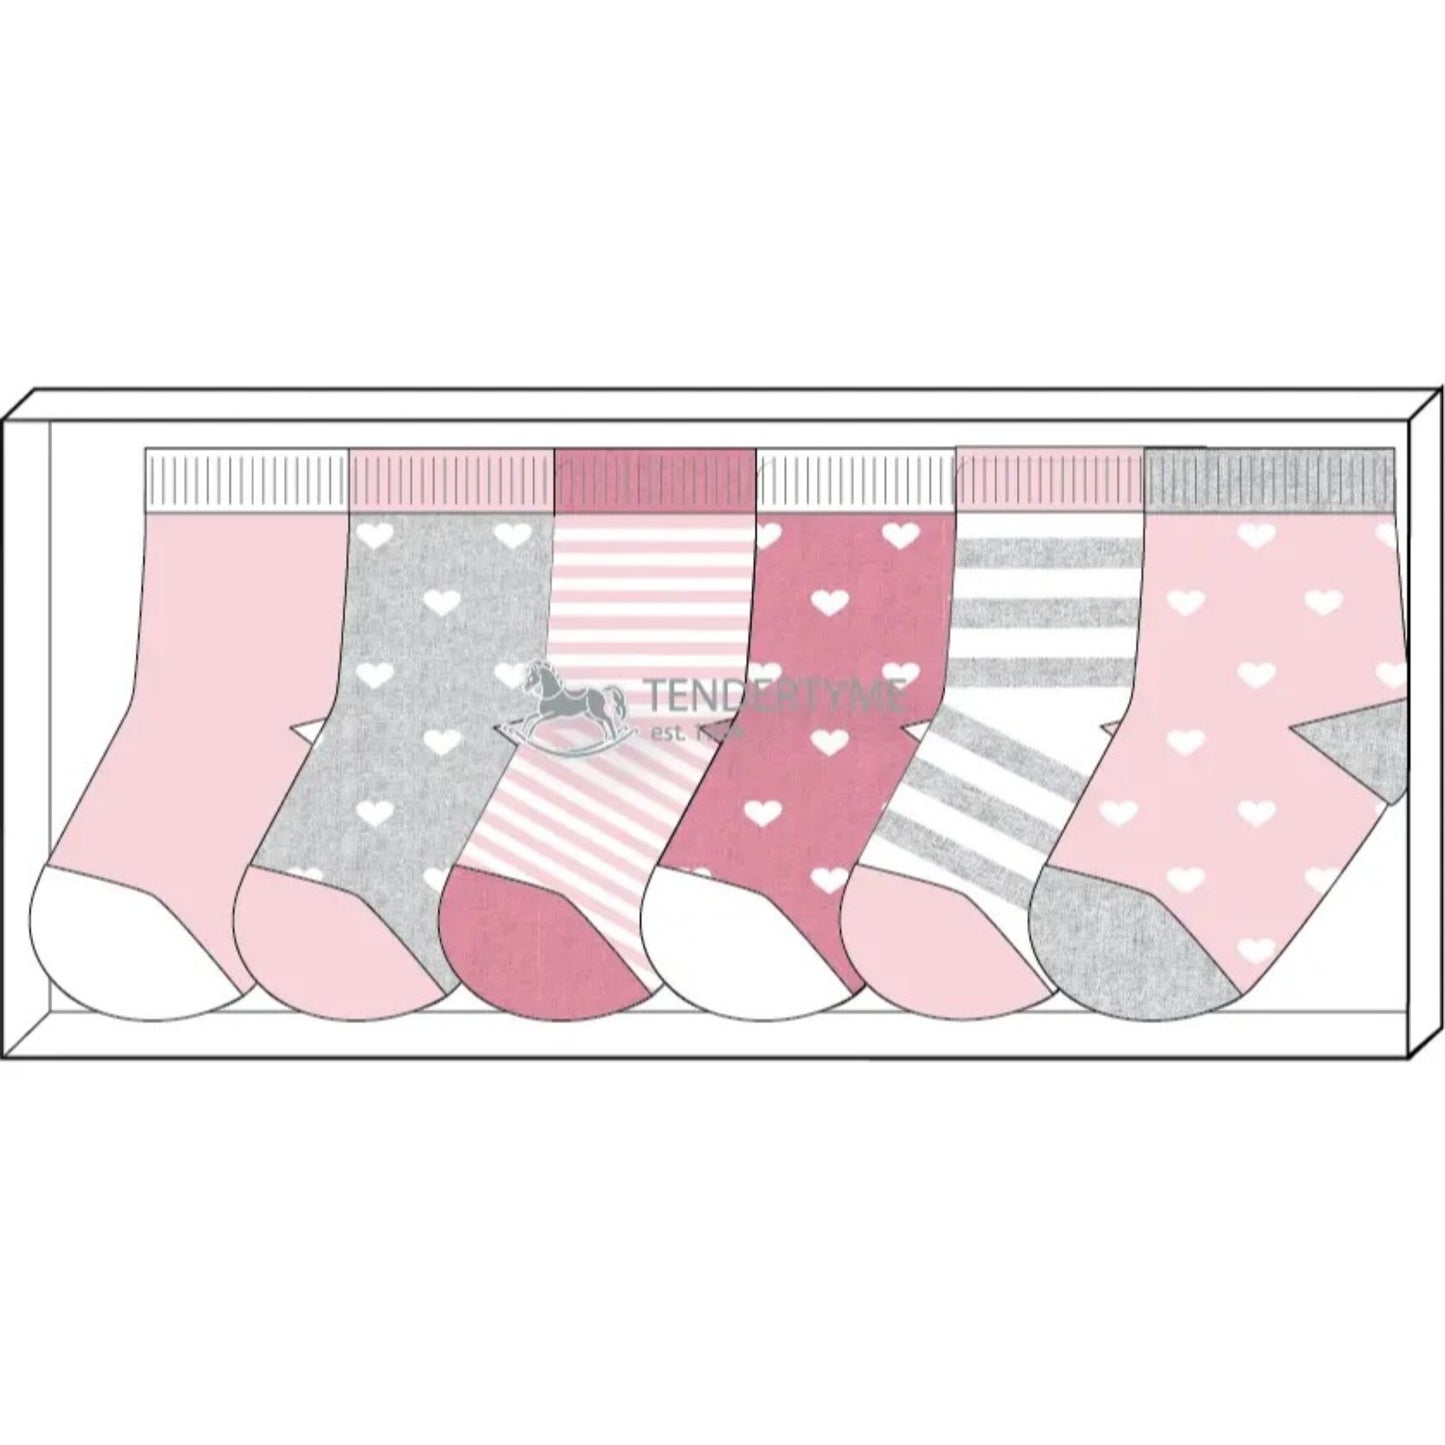 Rose Textiles 6 Pack Socks - Multiple Colors